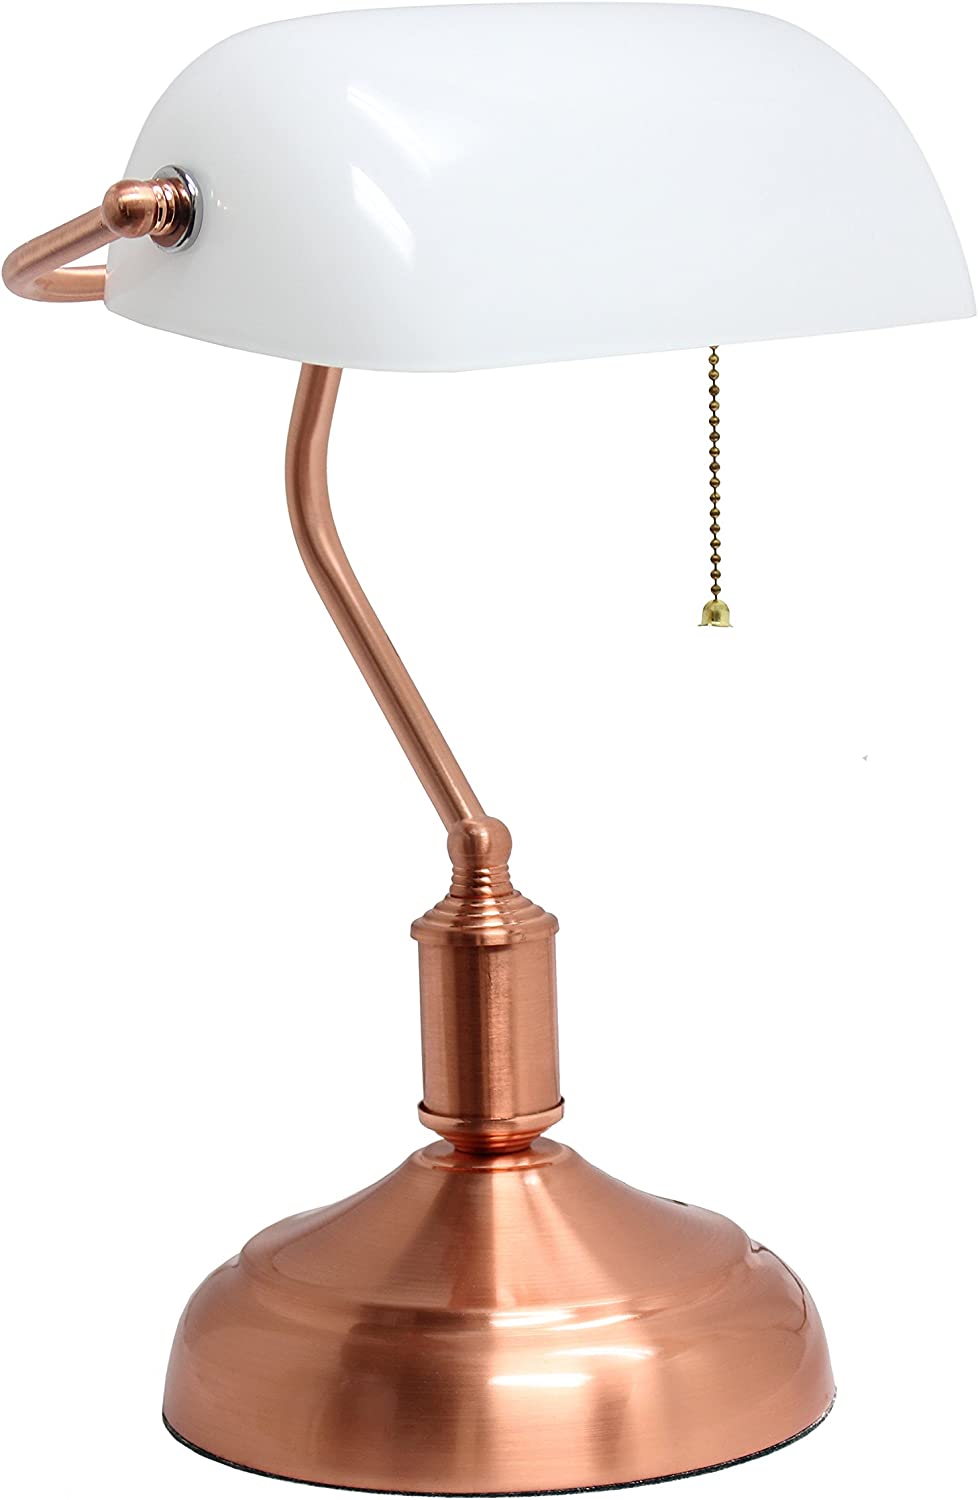 Simple Designs LT3216-RGD Executive Banker's Glass Shade, Desk Lamp, Rose Gold/White